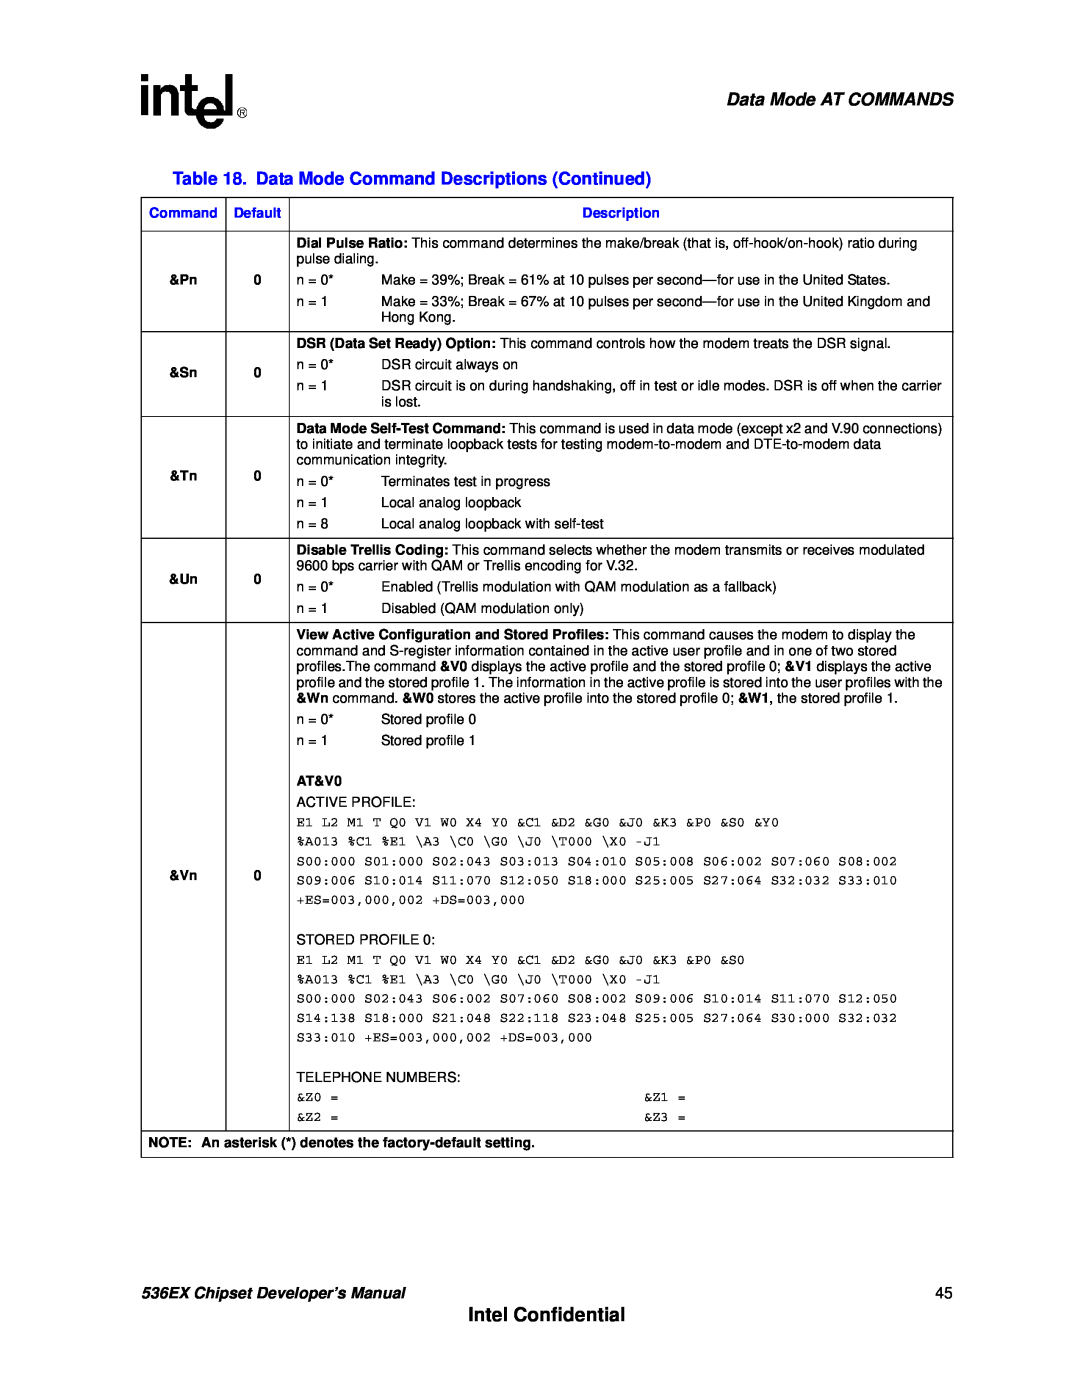 Intel manual Intel Confidential, Data Mode AT COMMANDS, 536EX Chipset Developer’s Manual, AT&V0 